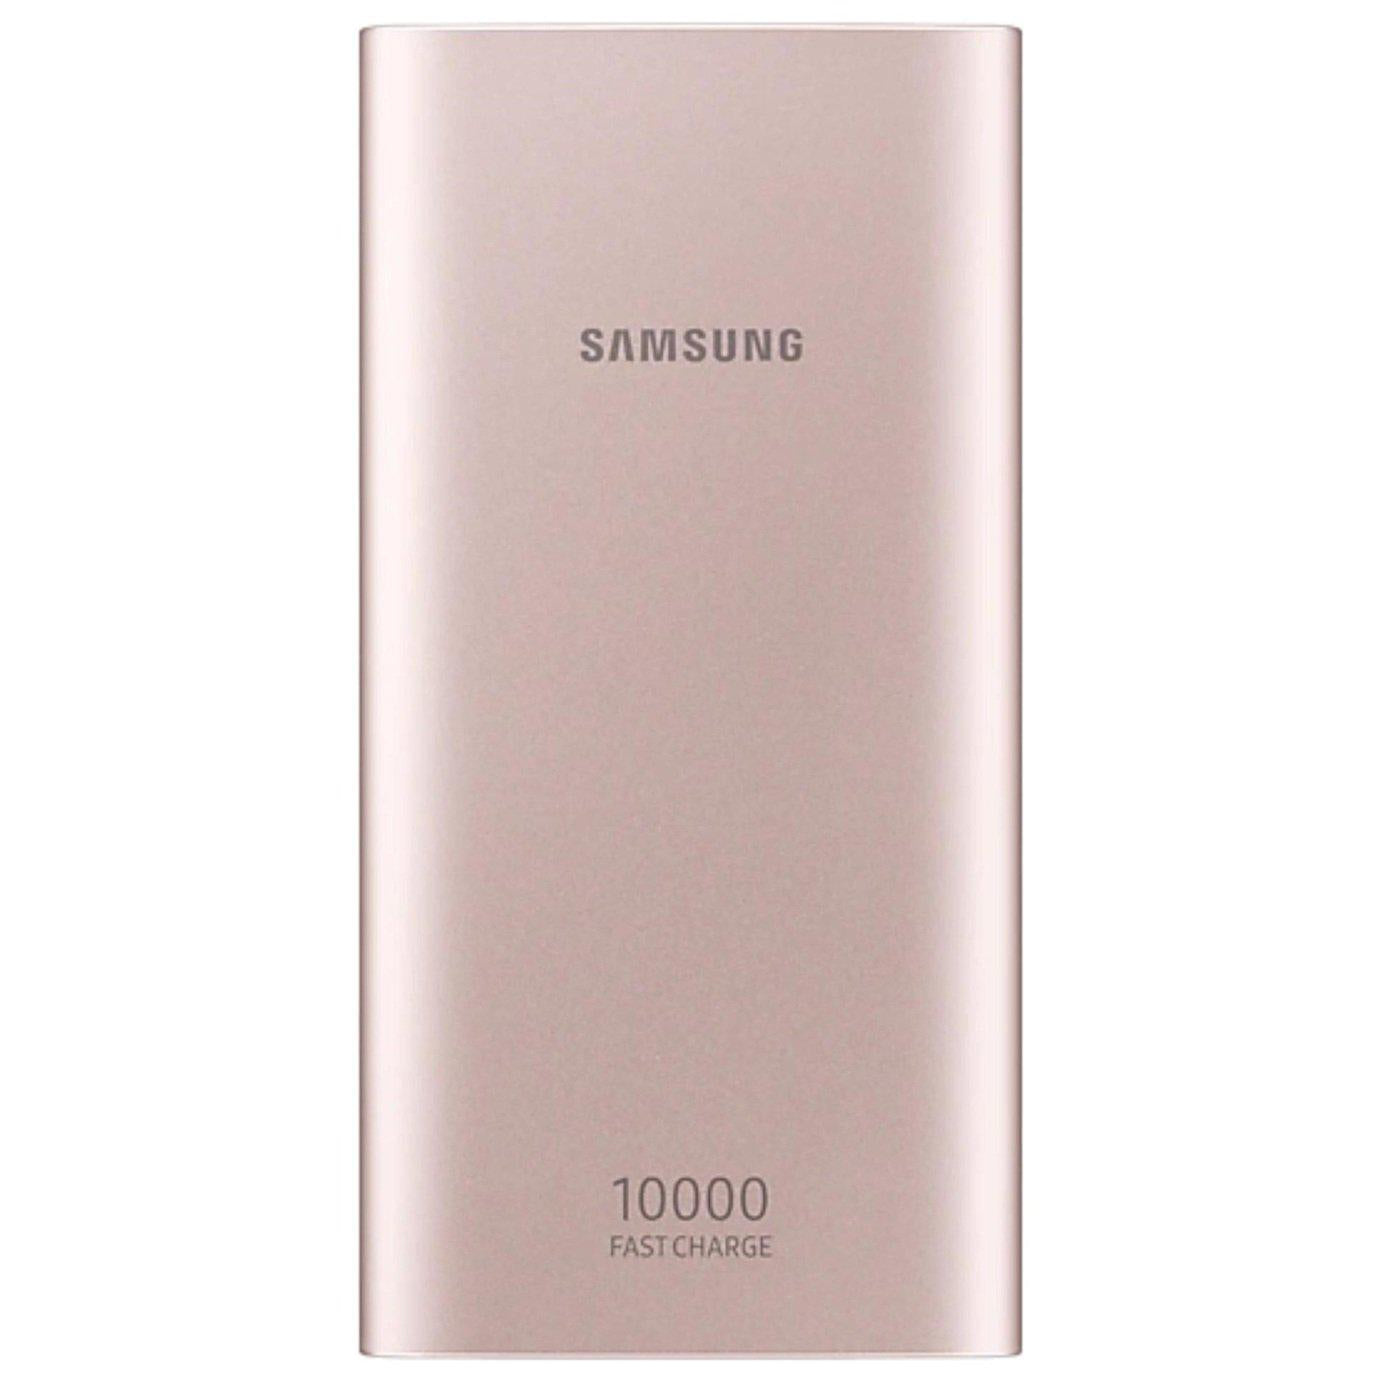 Samsung EBP1100C Battery Pack - Pink